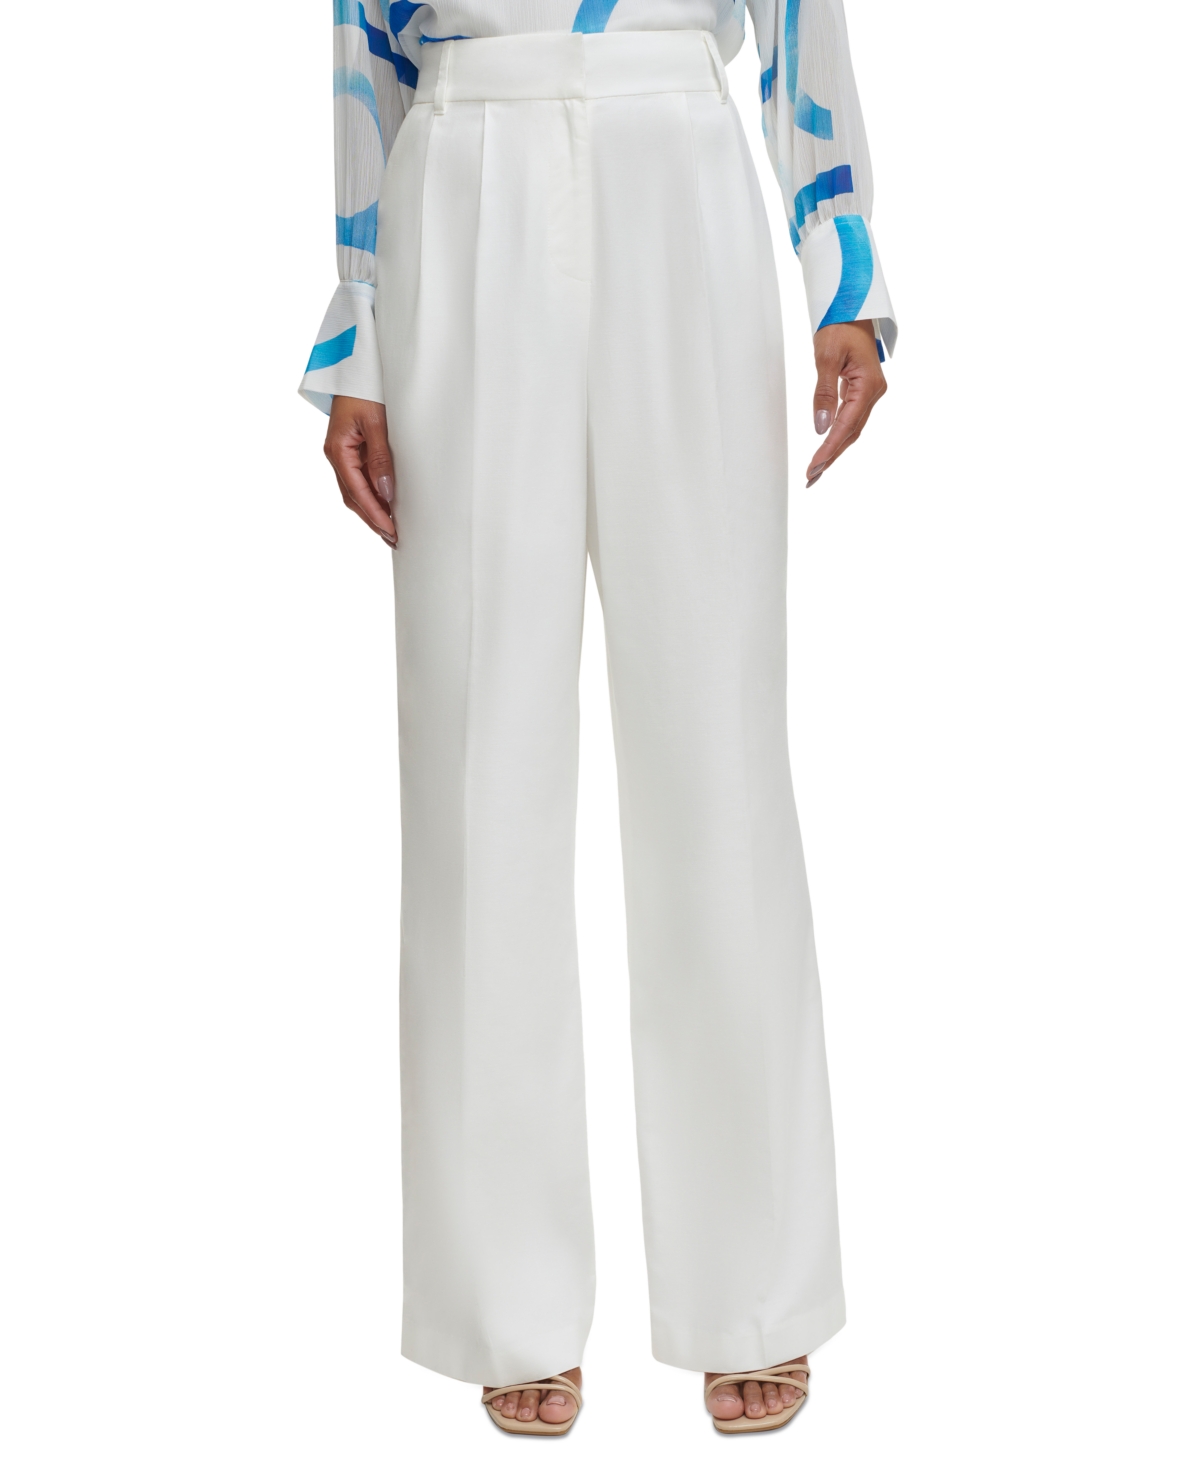 Vintage Wide Leg Pants & Beach Pajamas History Calvin Klein Womens Pleat-Front Wide-Leg Pants - Soft White $69.50 AT vintagedancer.com